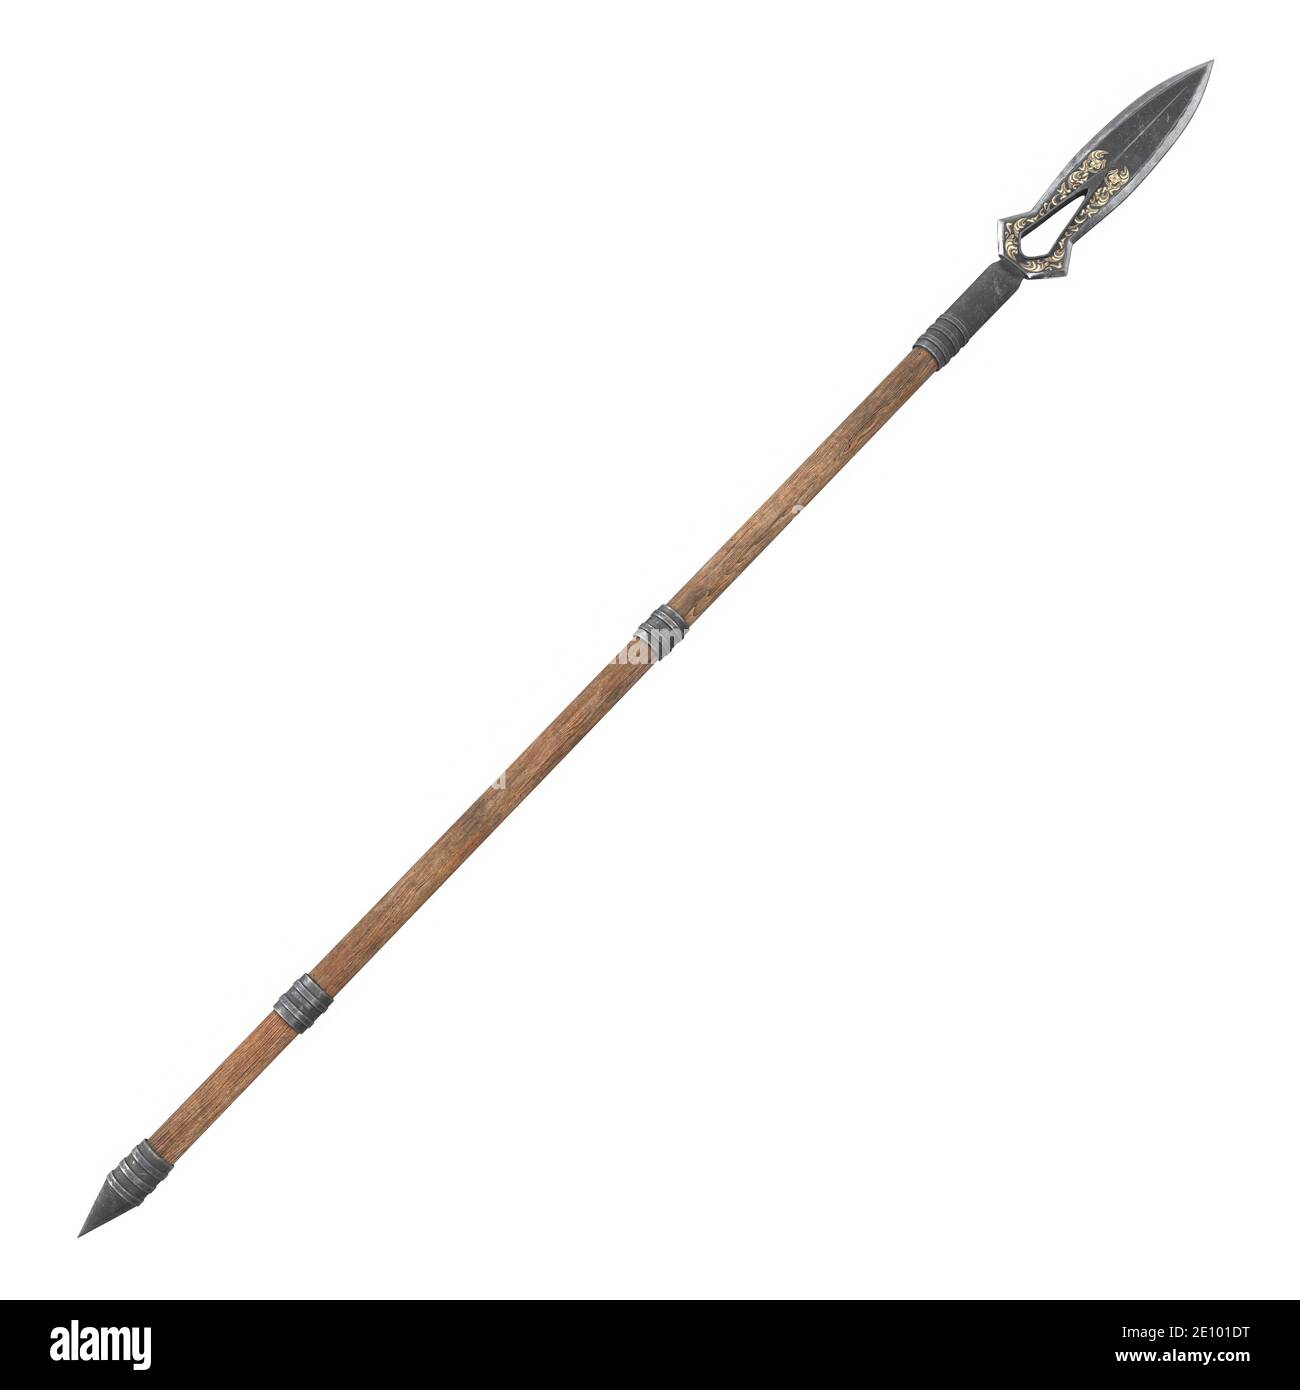 https://c8.alamy.com/comp/2E101DT/long-spear-weapon-on-an-isolated-white-background-3d-illustration-2E101DT.jpg